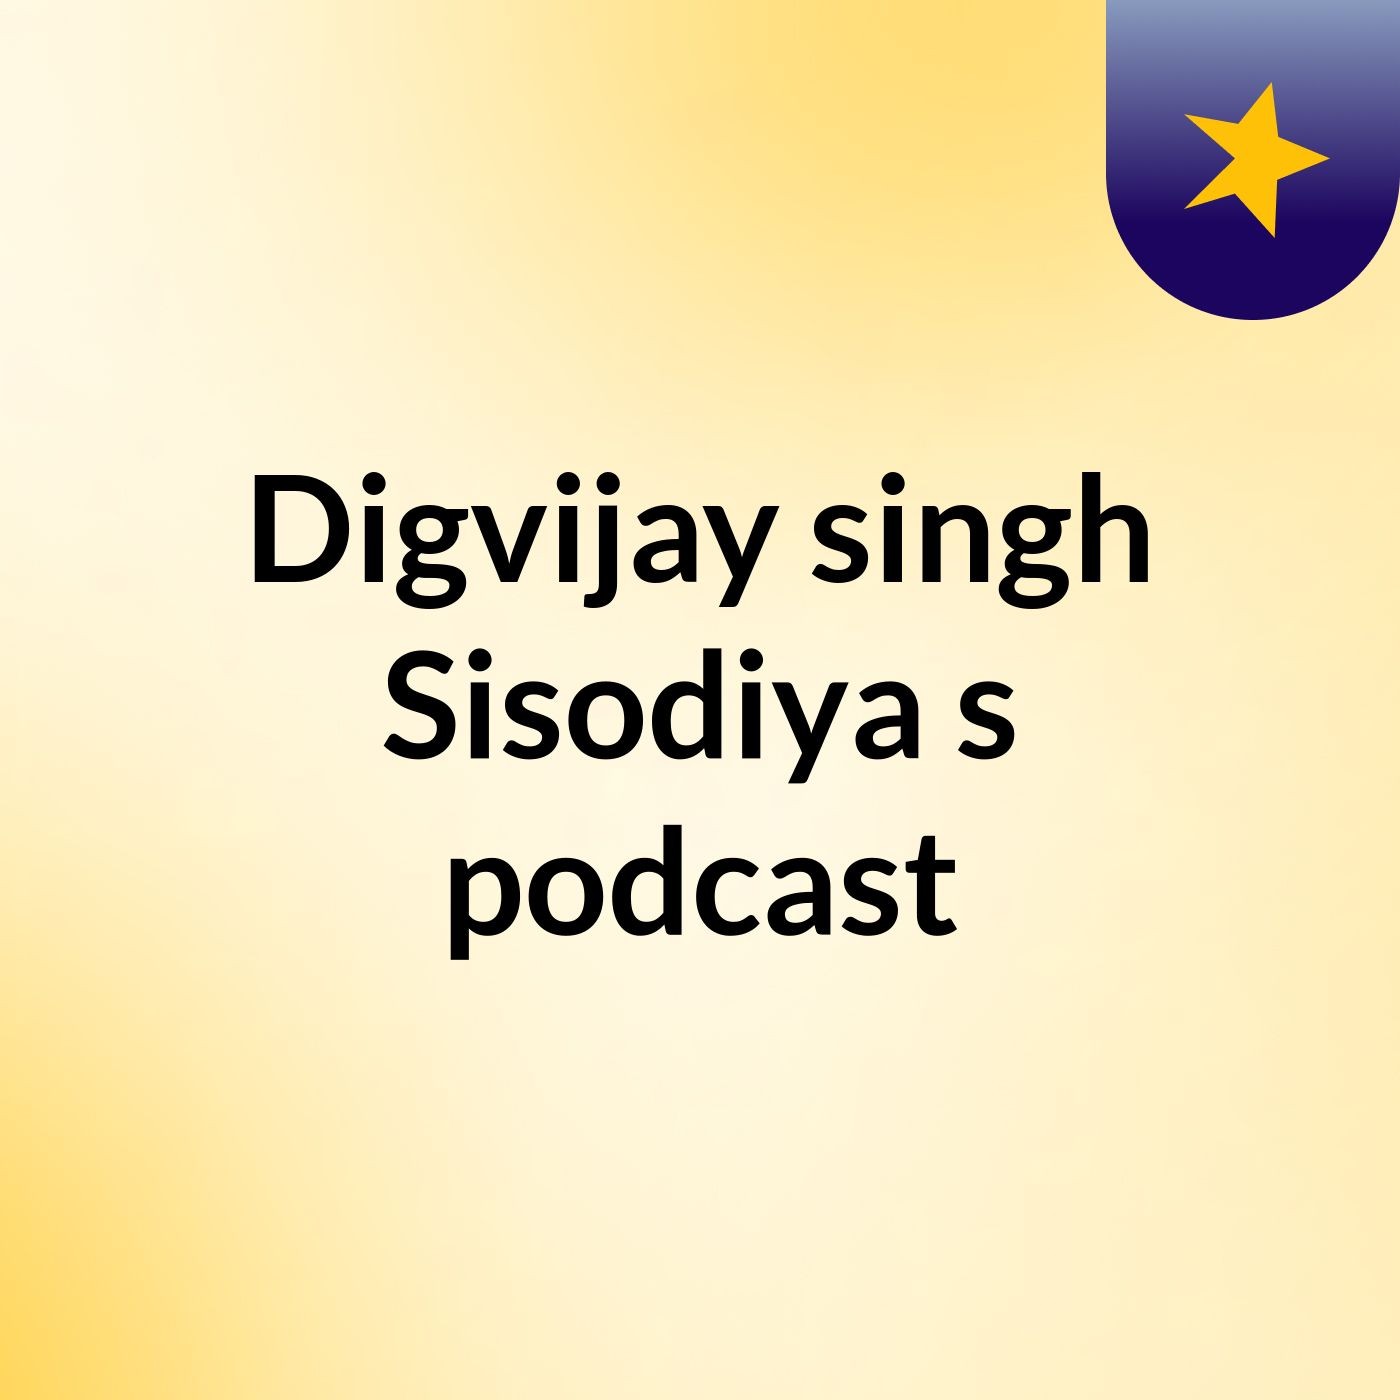 Episode 18 - Digvijay singh Sisodiya's podcast